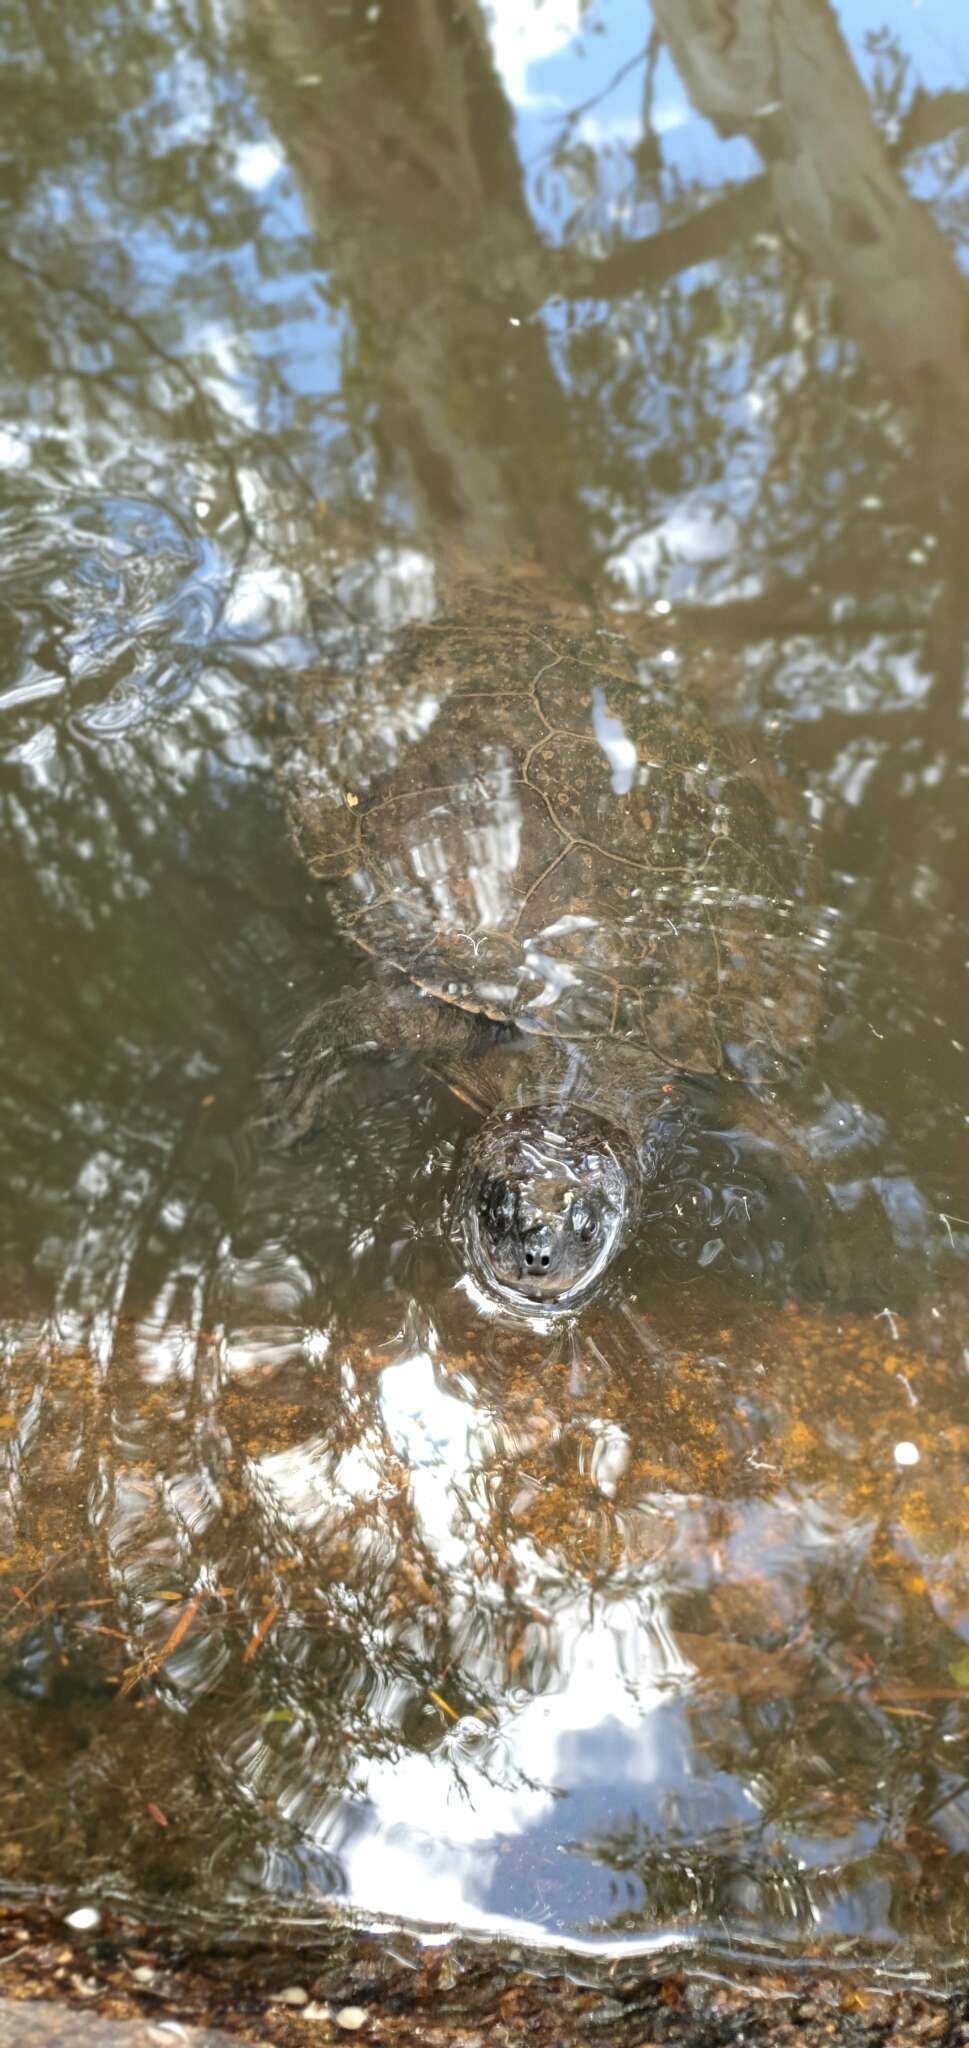 Image of Western Sawshelled Turtle